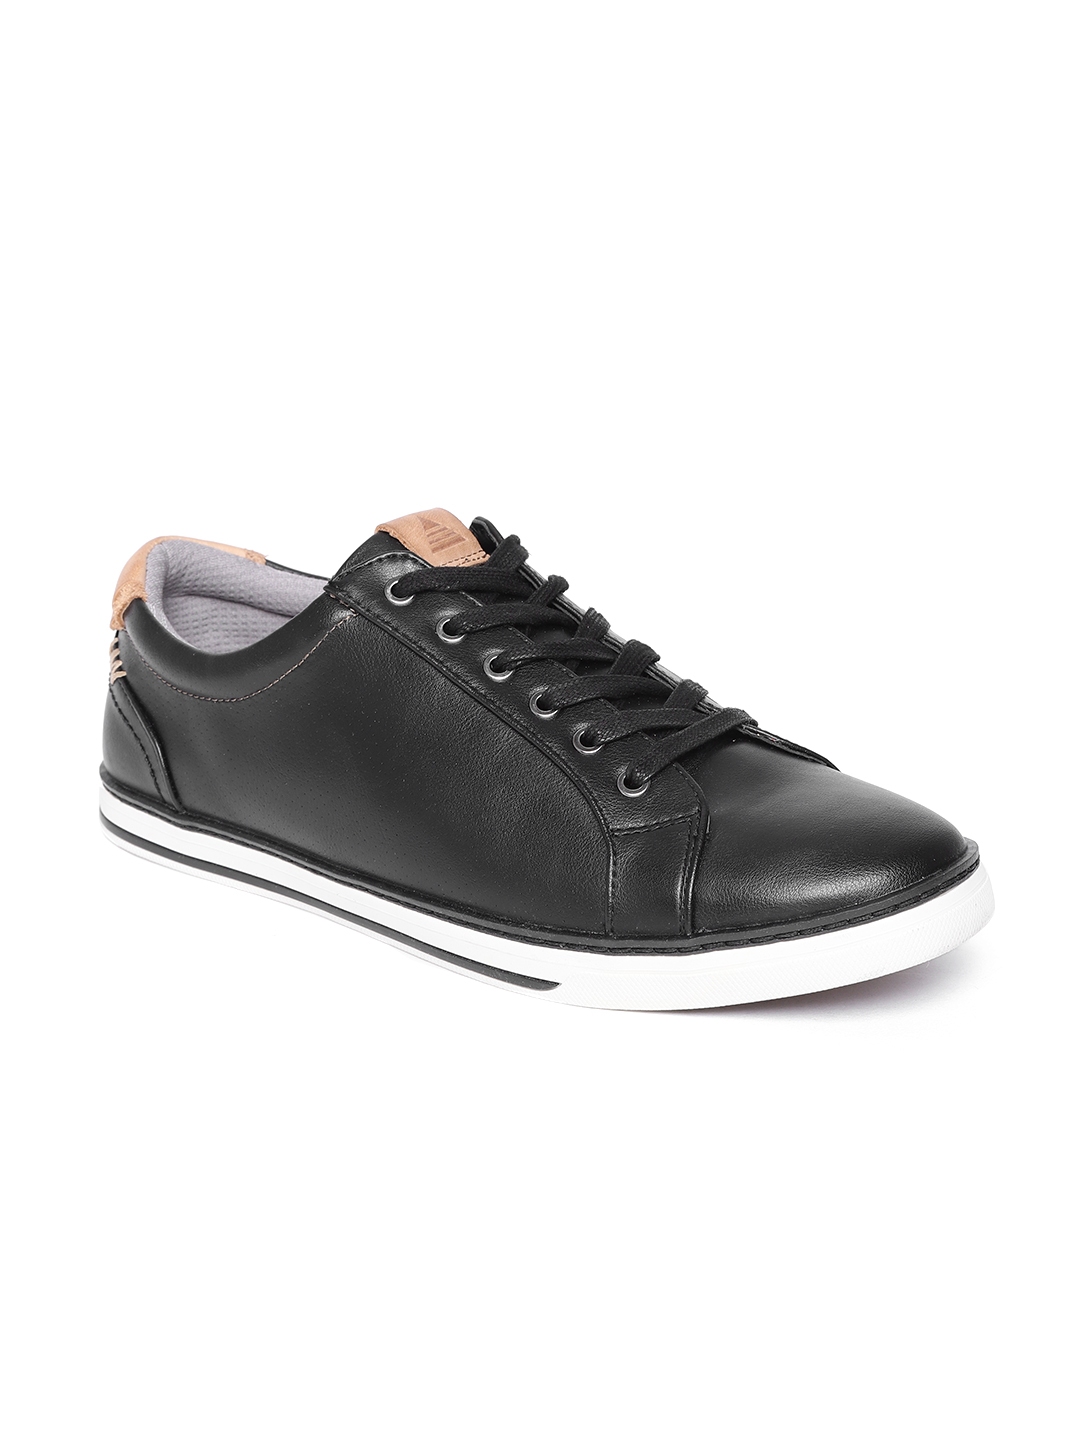 Buy ALDO Men Black Sneakers - Casual Shoes for Men 7373931 | Myntra